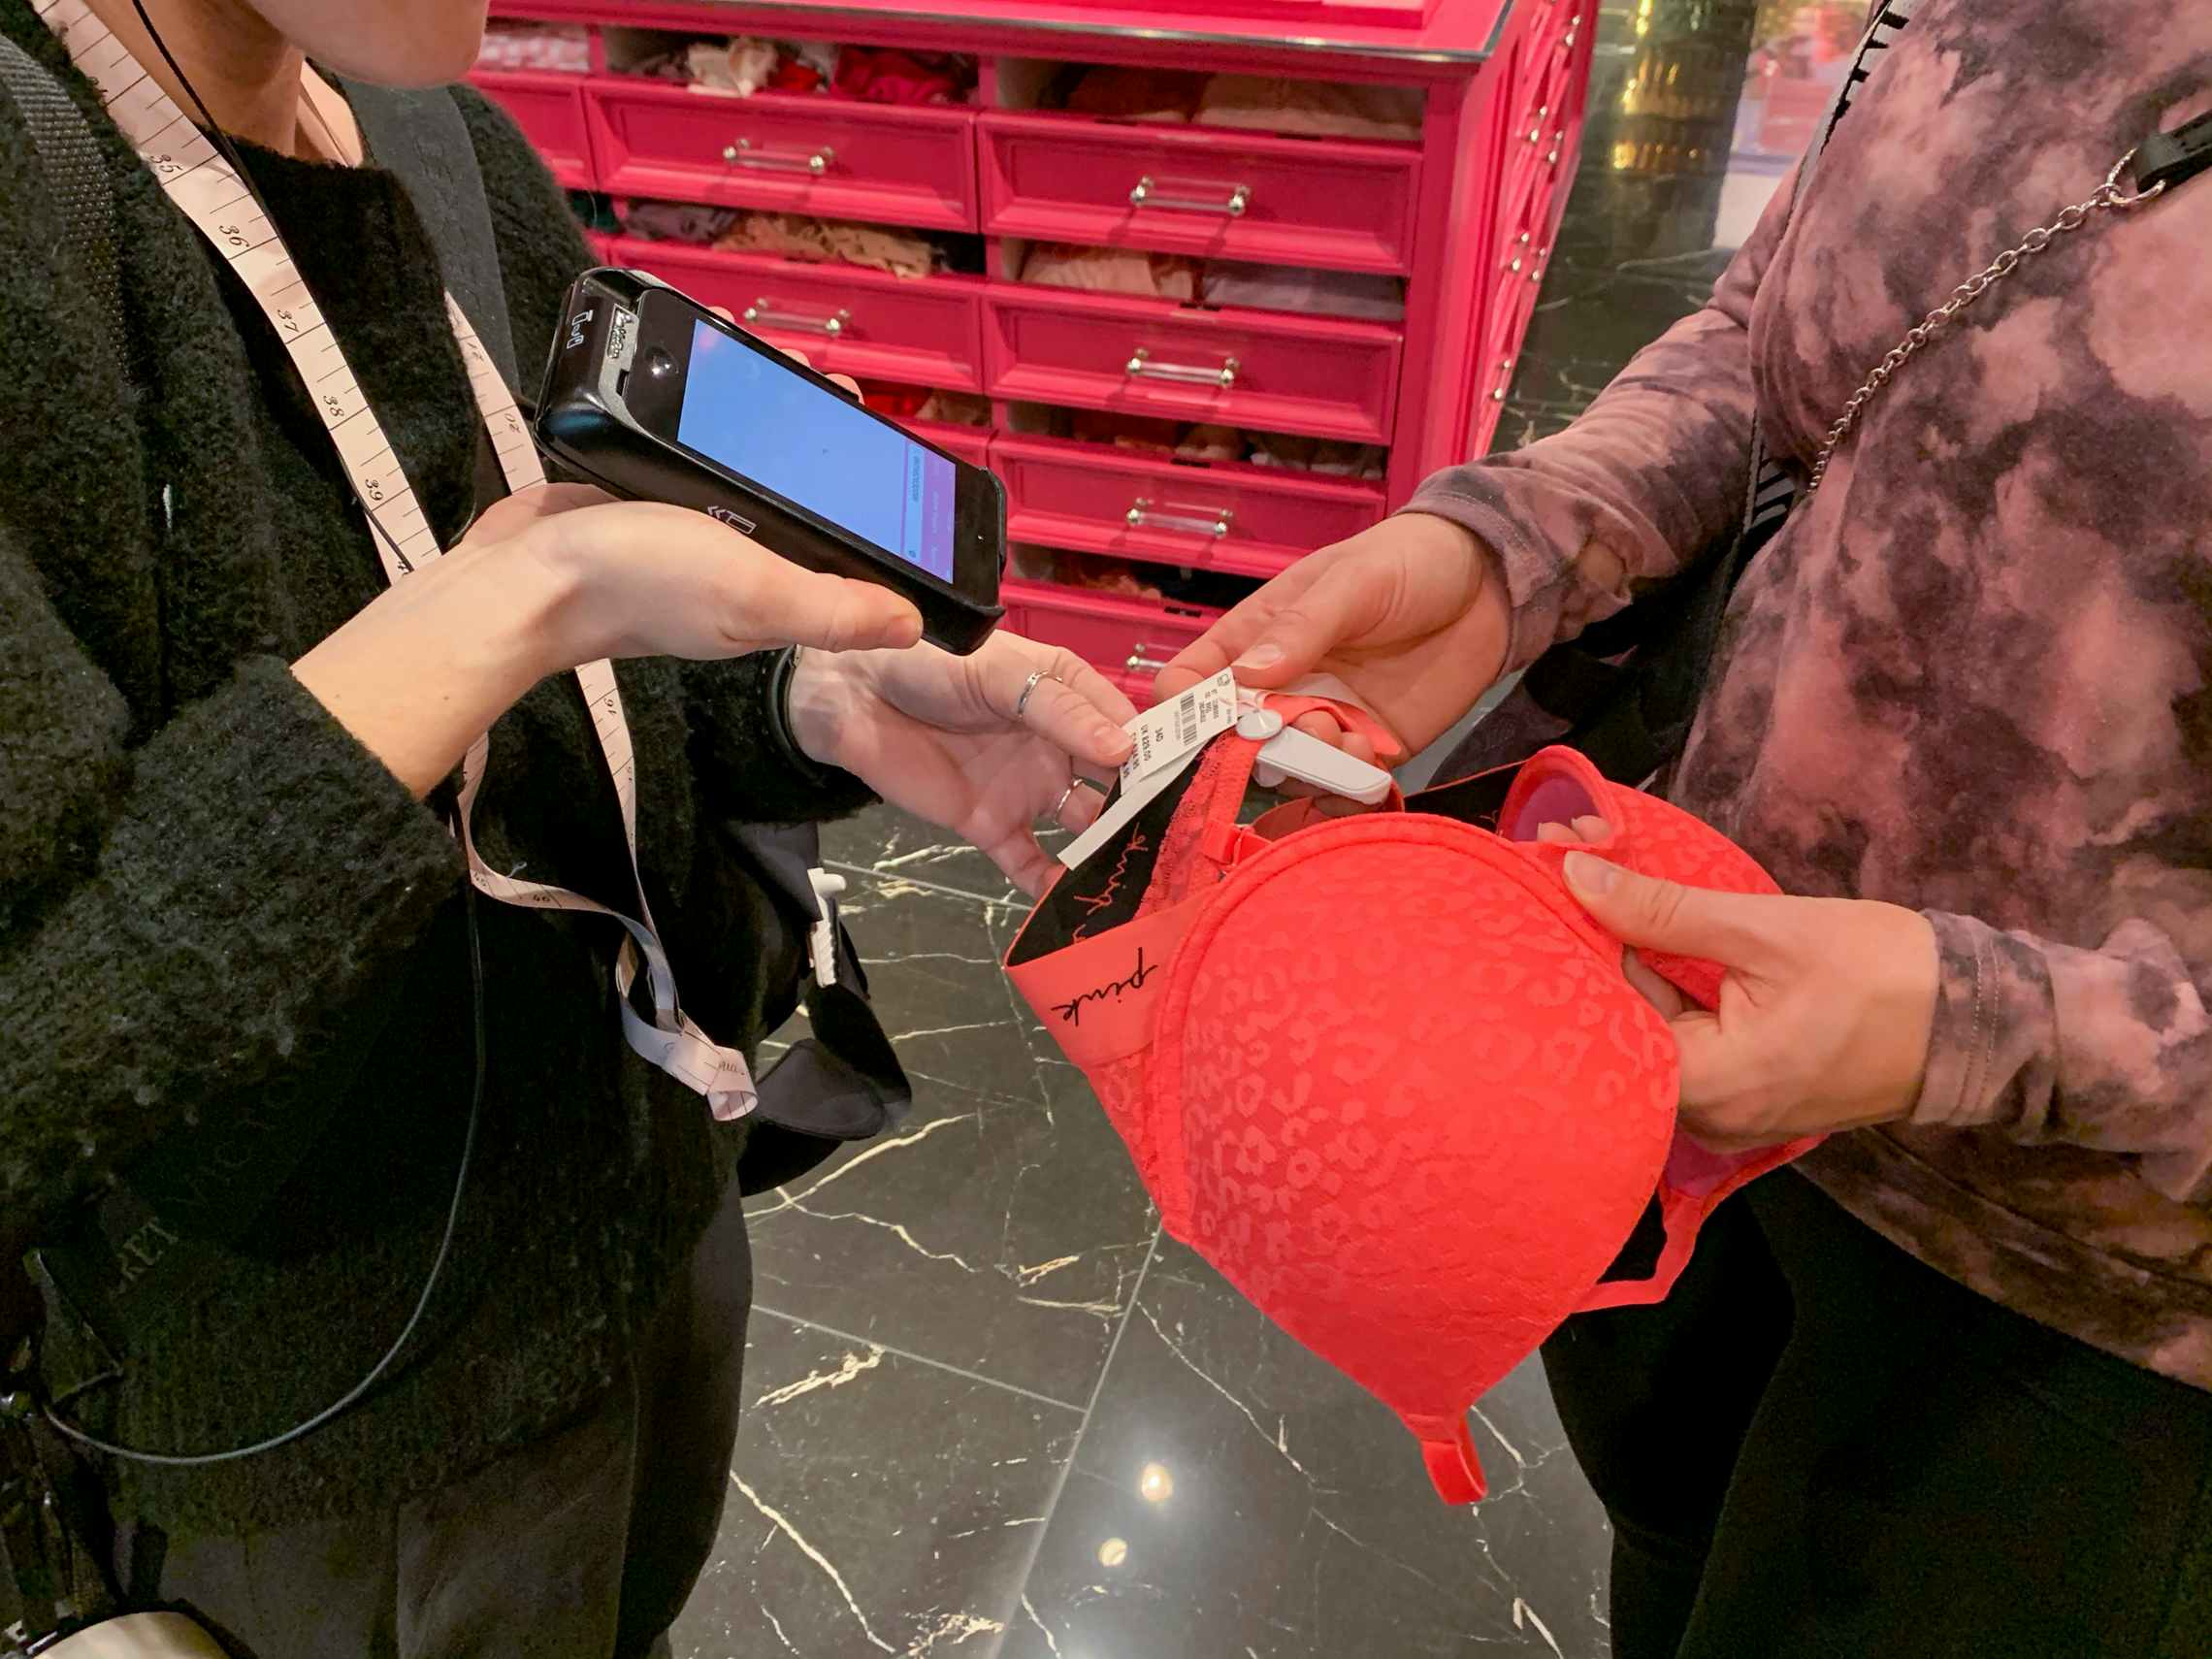 An employee scanning a bra held by a customer.